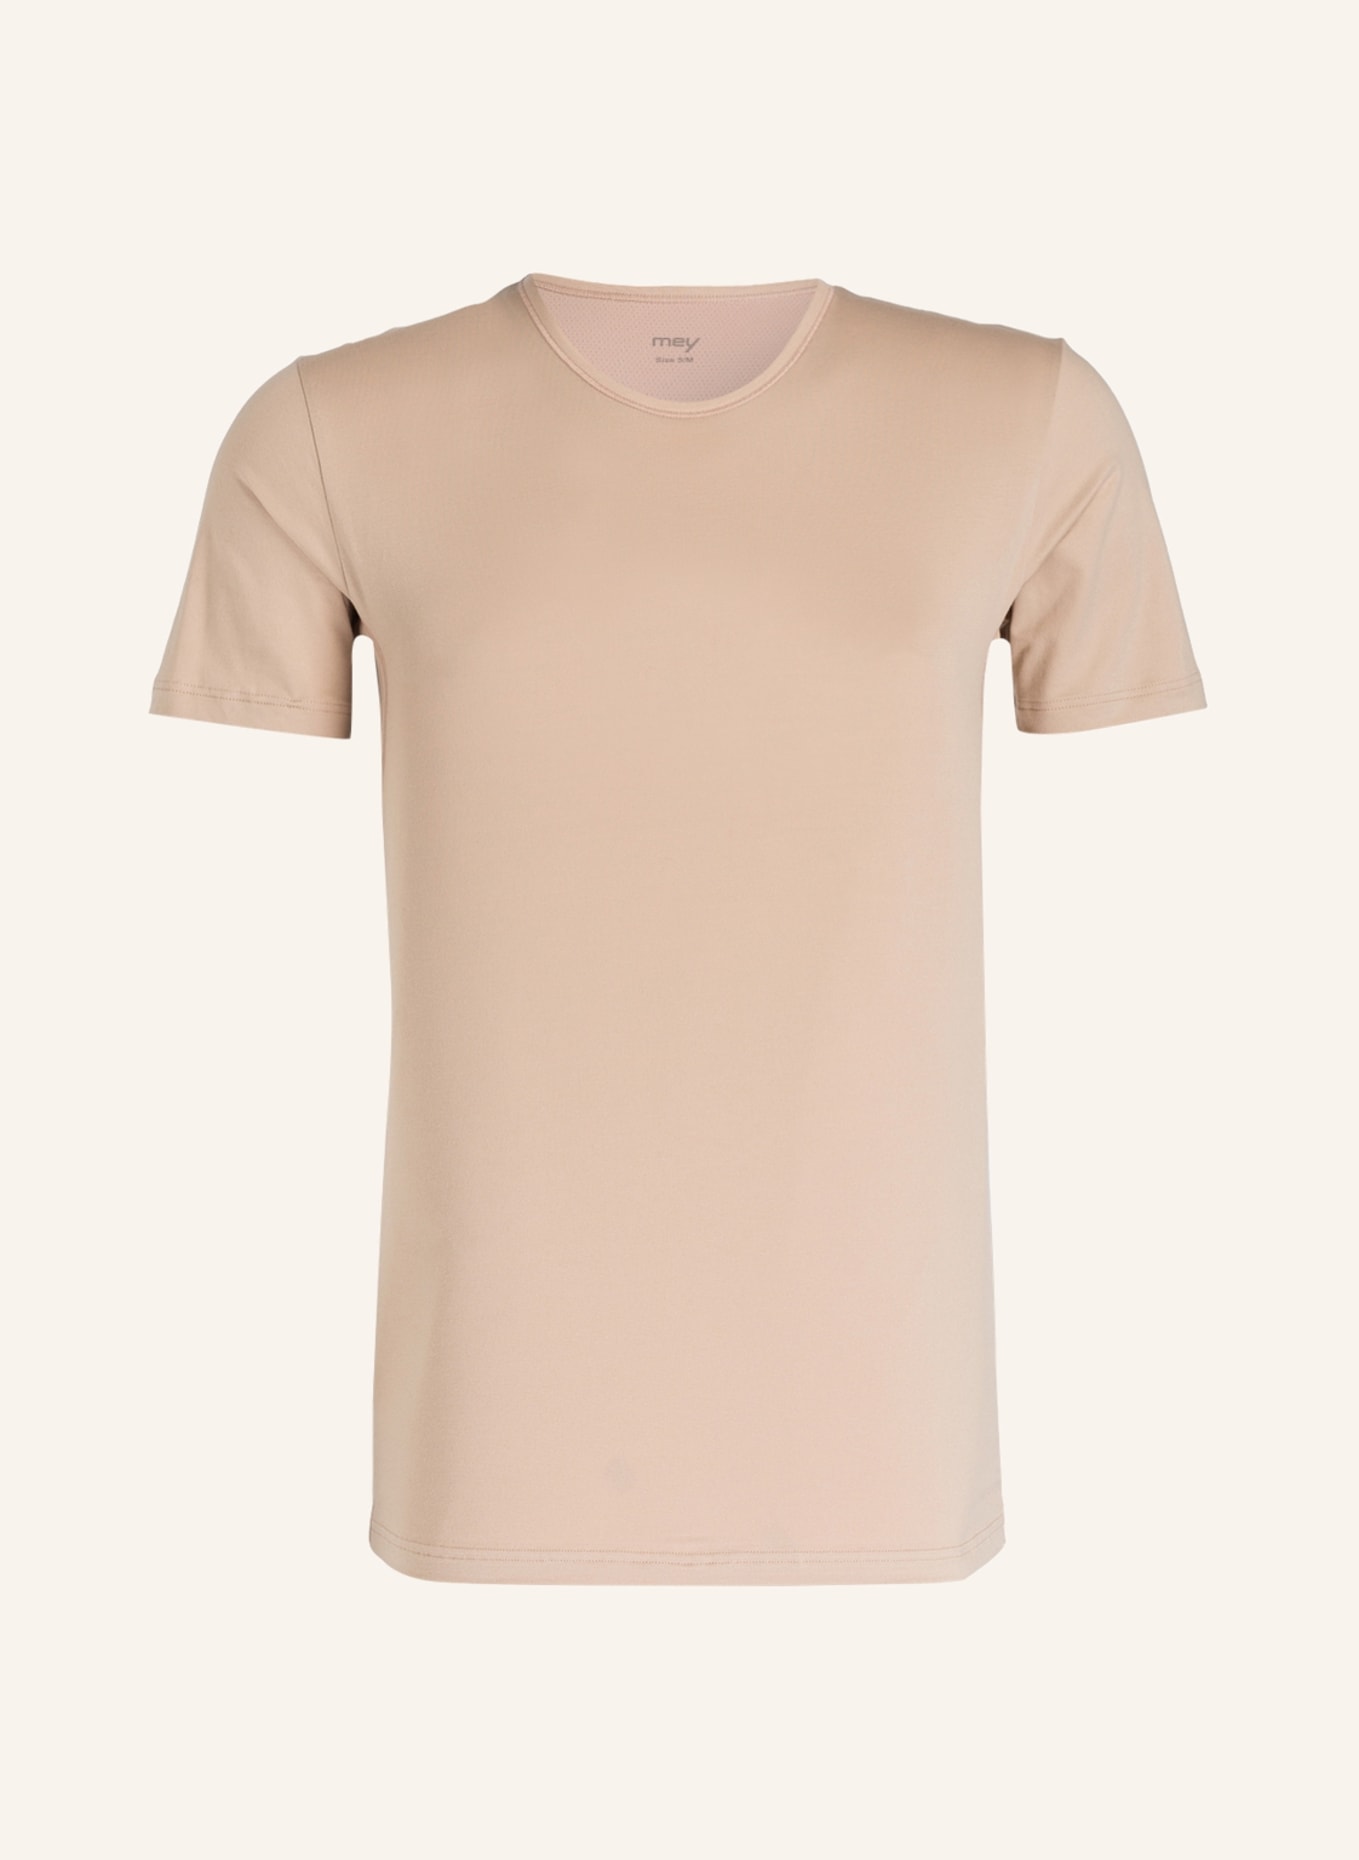 mey T-Shirt Serie DRY COTTON, Farbe: NUDE (Bild 1)